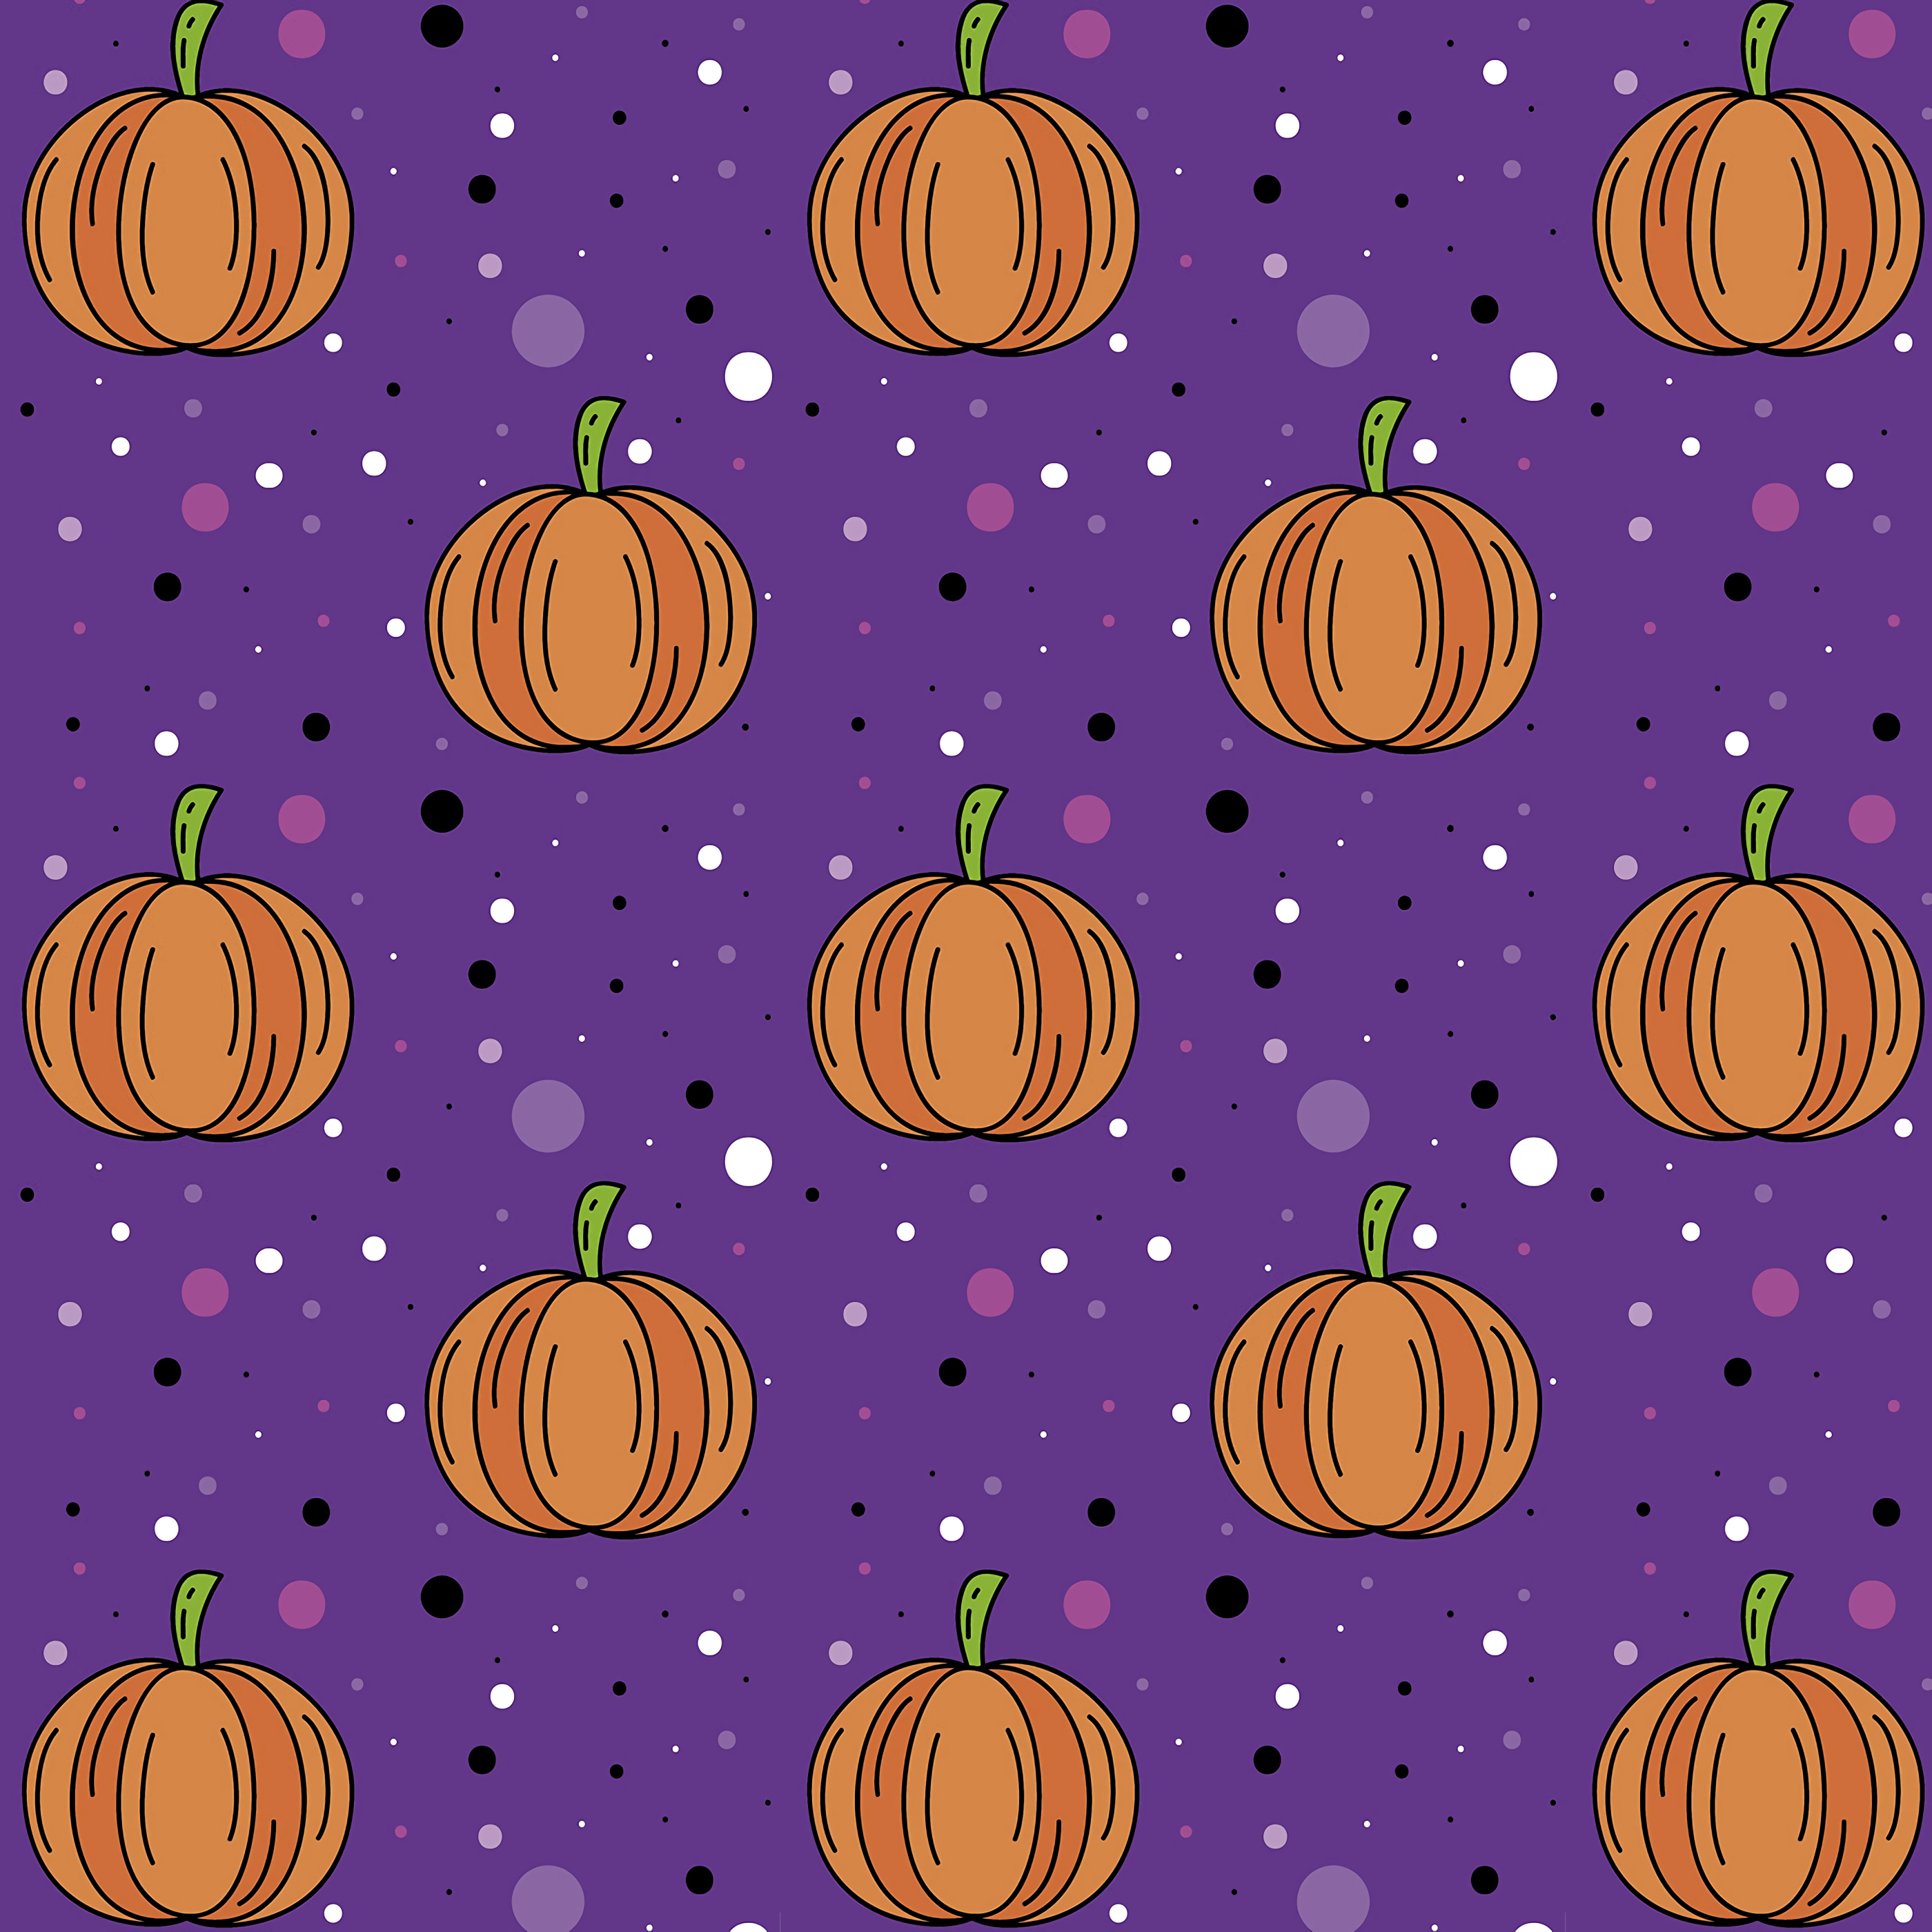 HQ Pumpkin Background Images